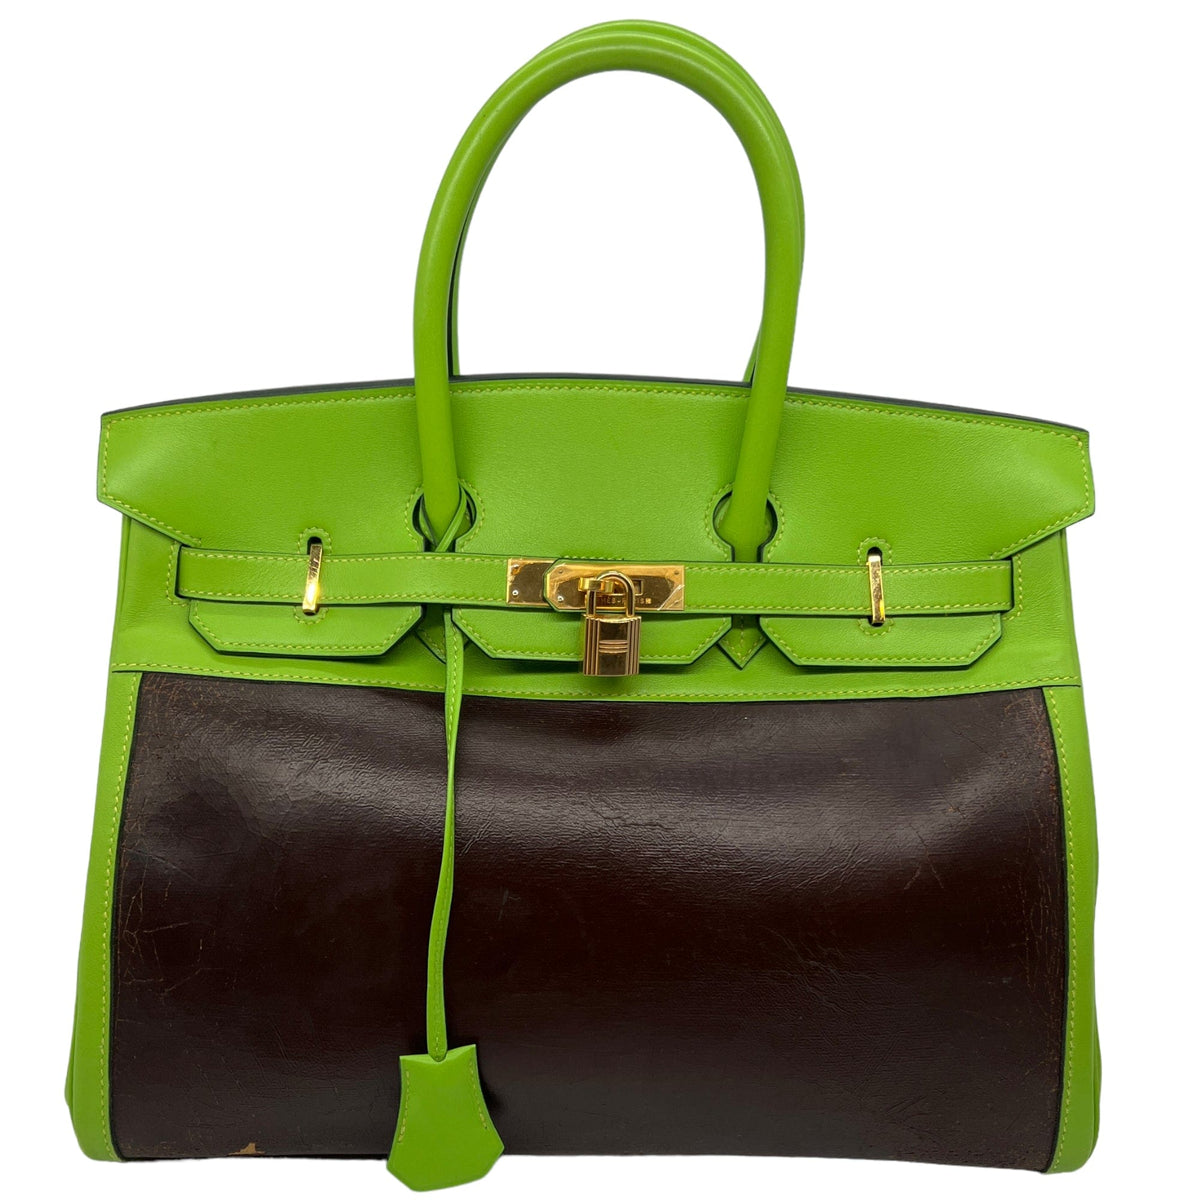 Shop Birkin Bags, Hermes